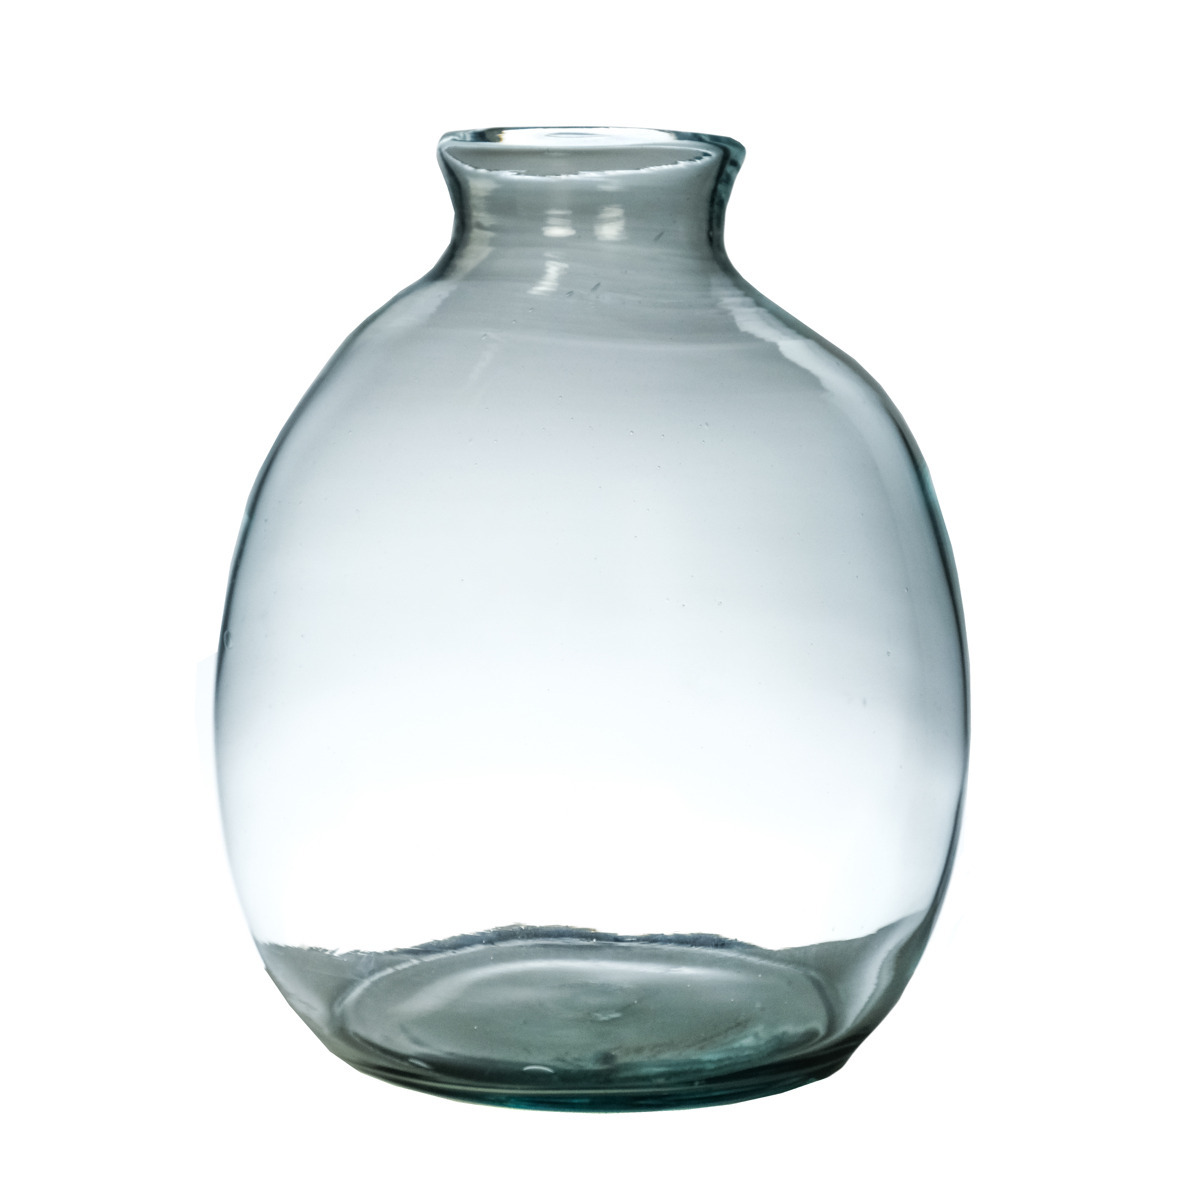 Hakbijl Glass Bloemenvaas Cheryl transparant eco glas D24 x H27 cm flesvaas